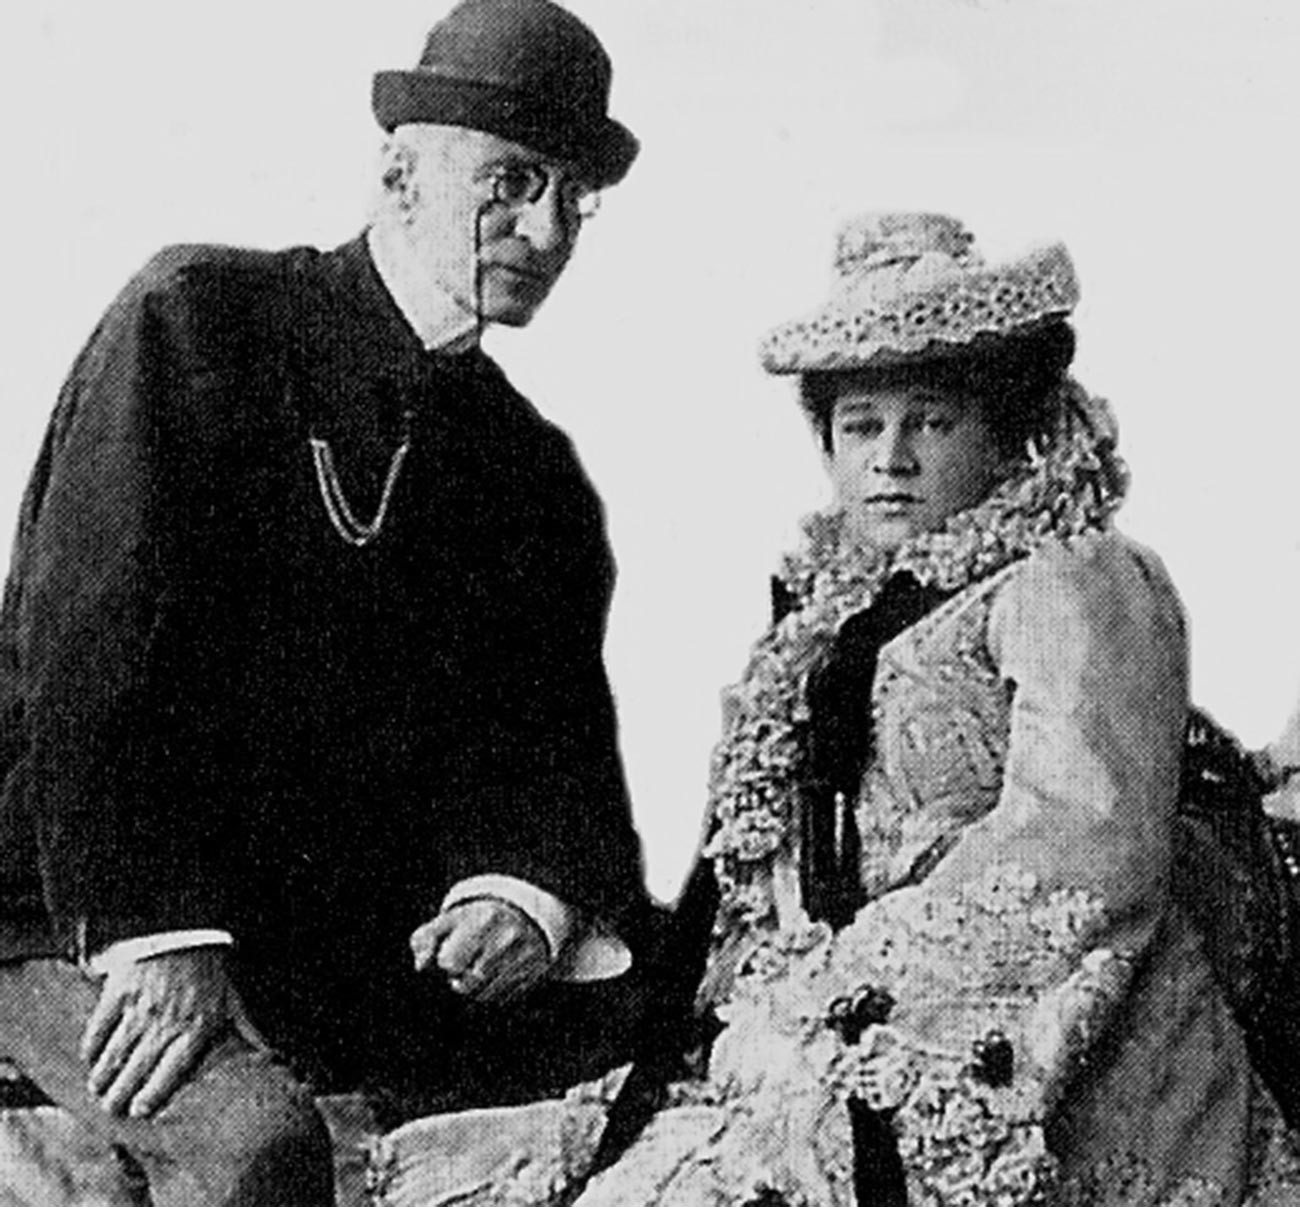 Grand Duke Nicholas Konstantinovich and his wife Nadezhda Dreyer, later the Duchess Iskander